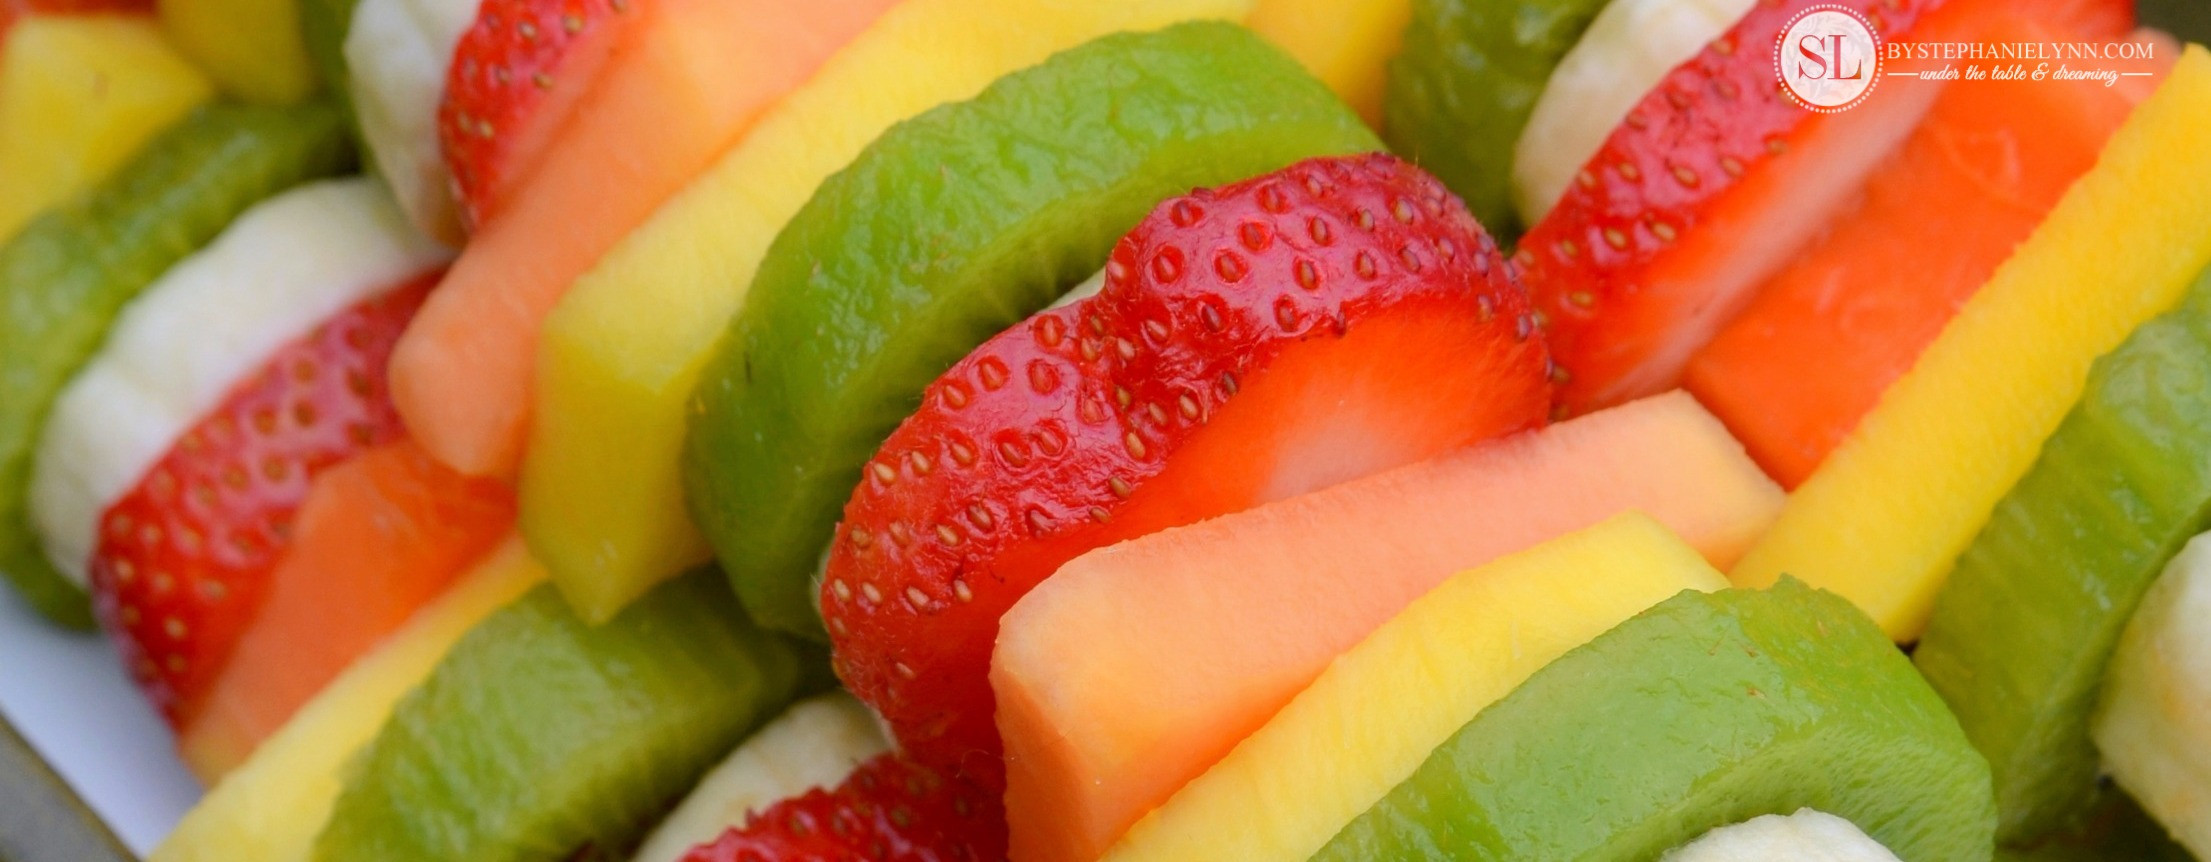 Healthy Snacks That Taste Good
 Healthy Summer Snacks with Taste of Nature